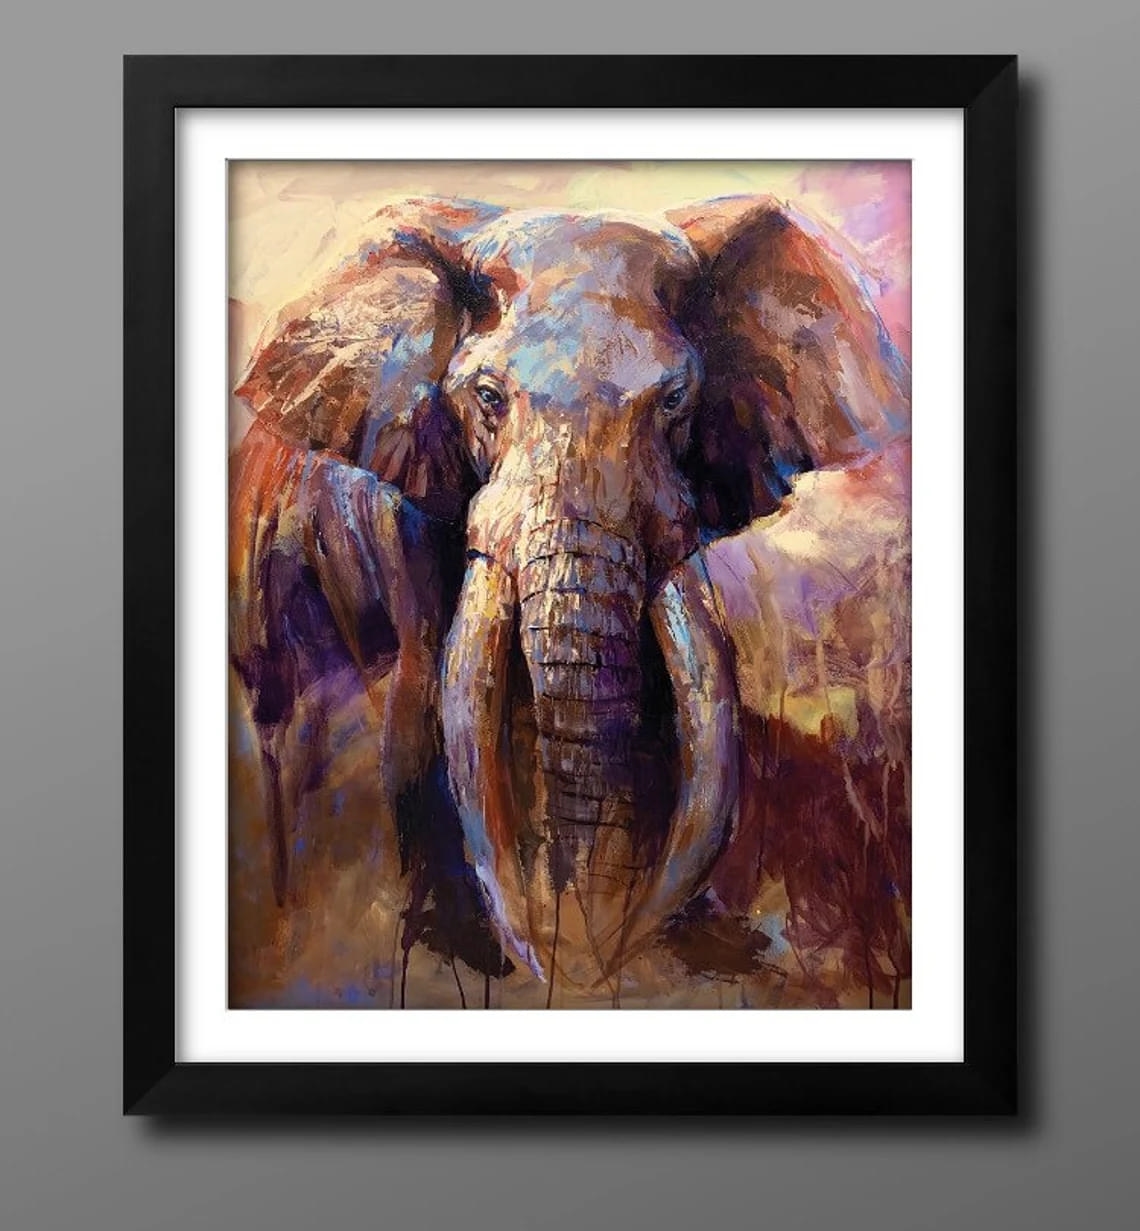 "The Great Tusker" - Elephant - Wildlife Artwork Sample on Wall